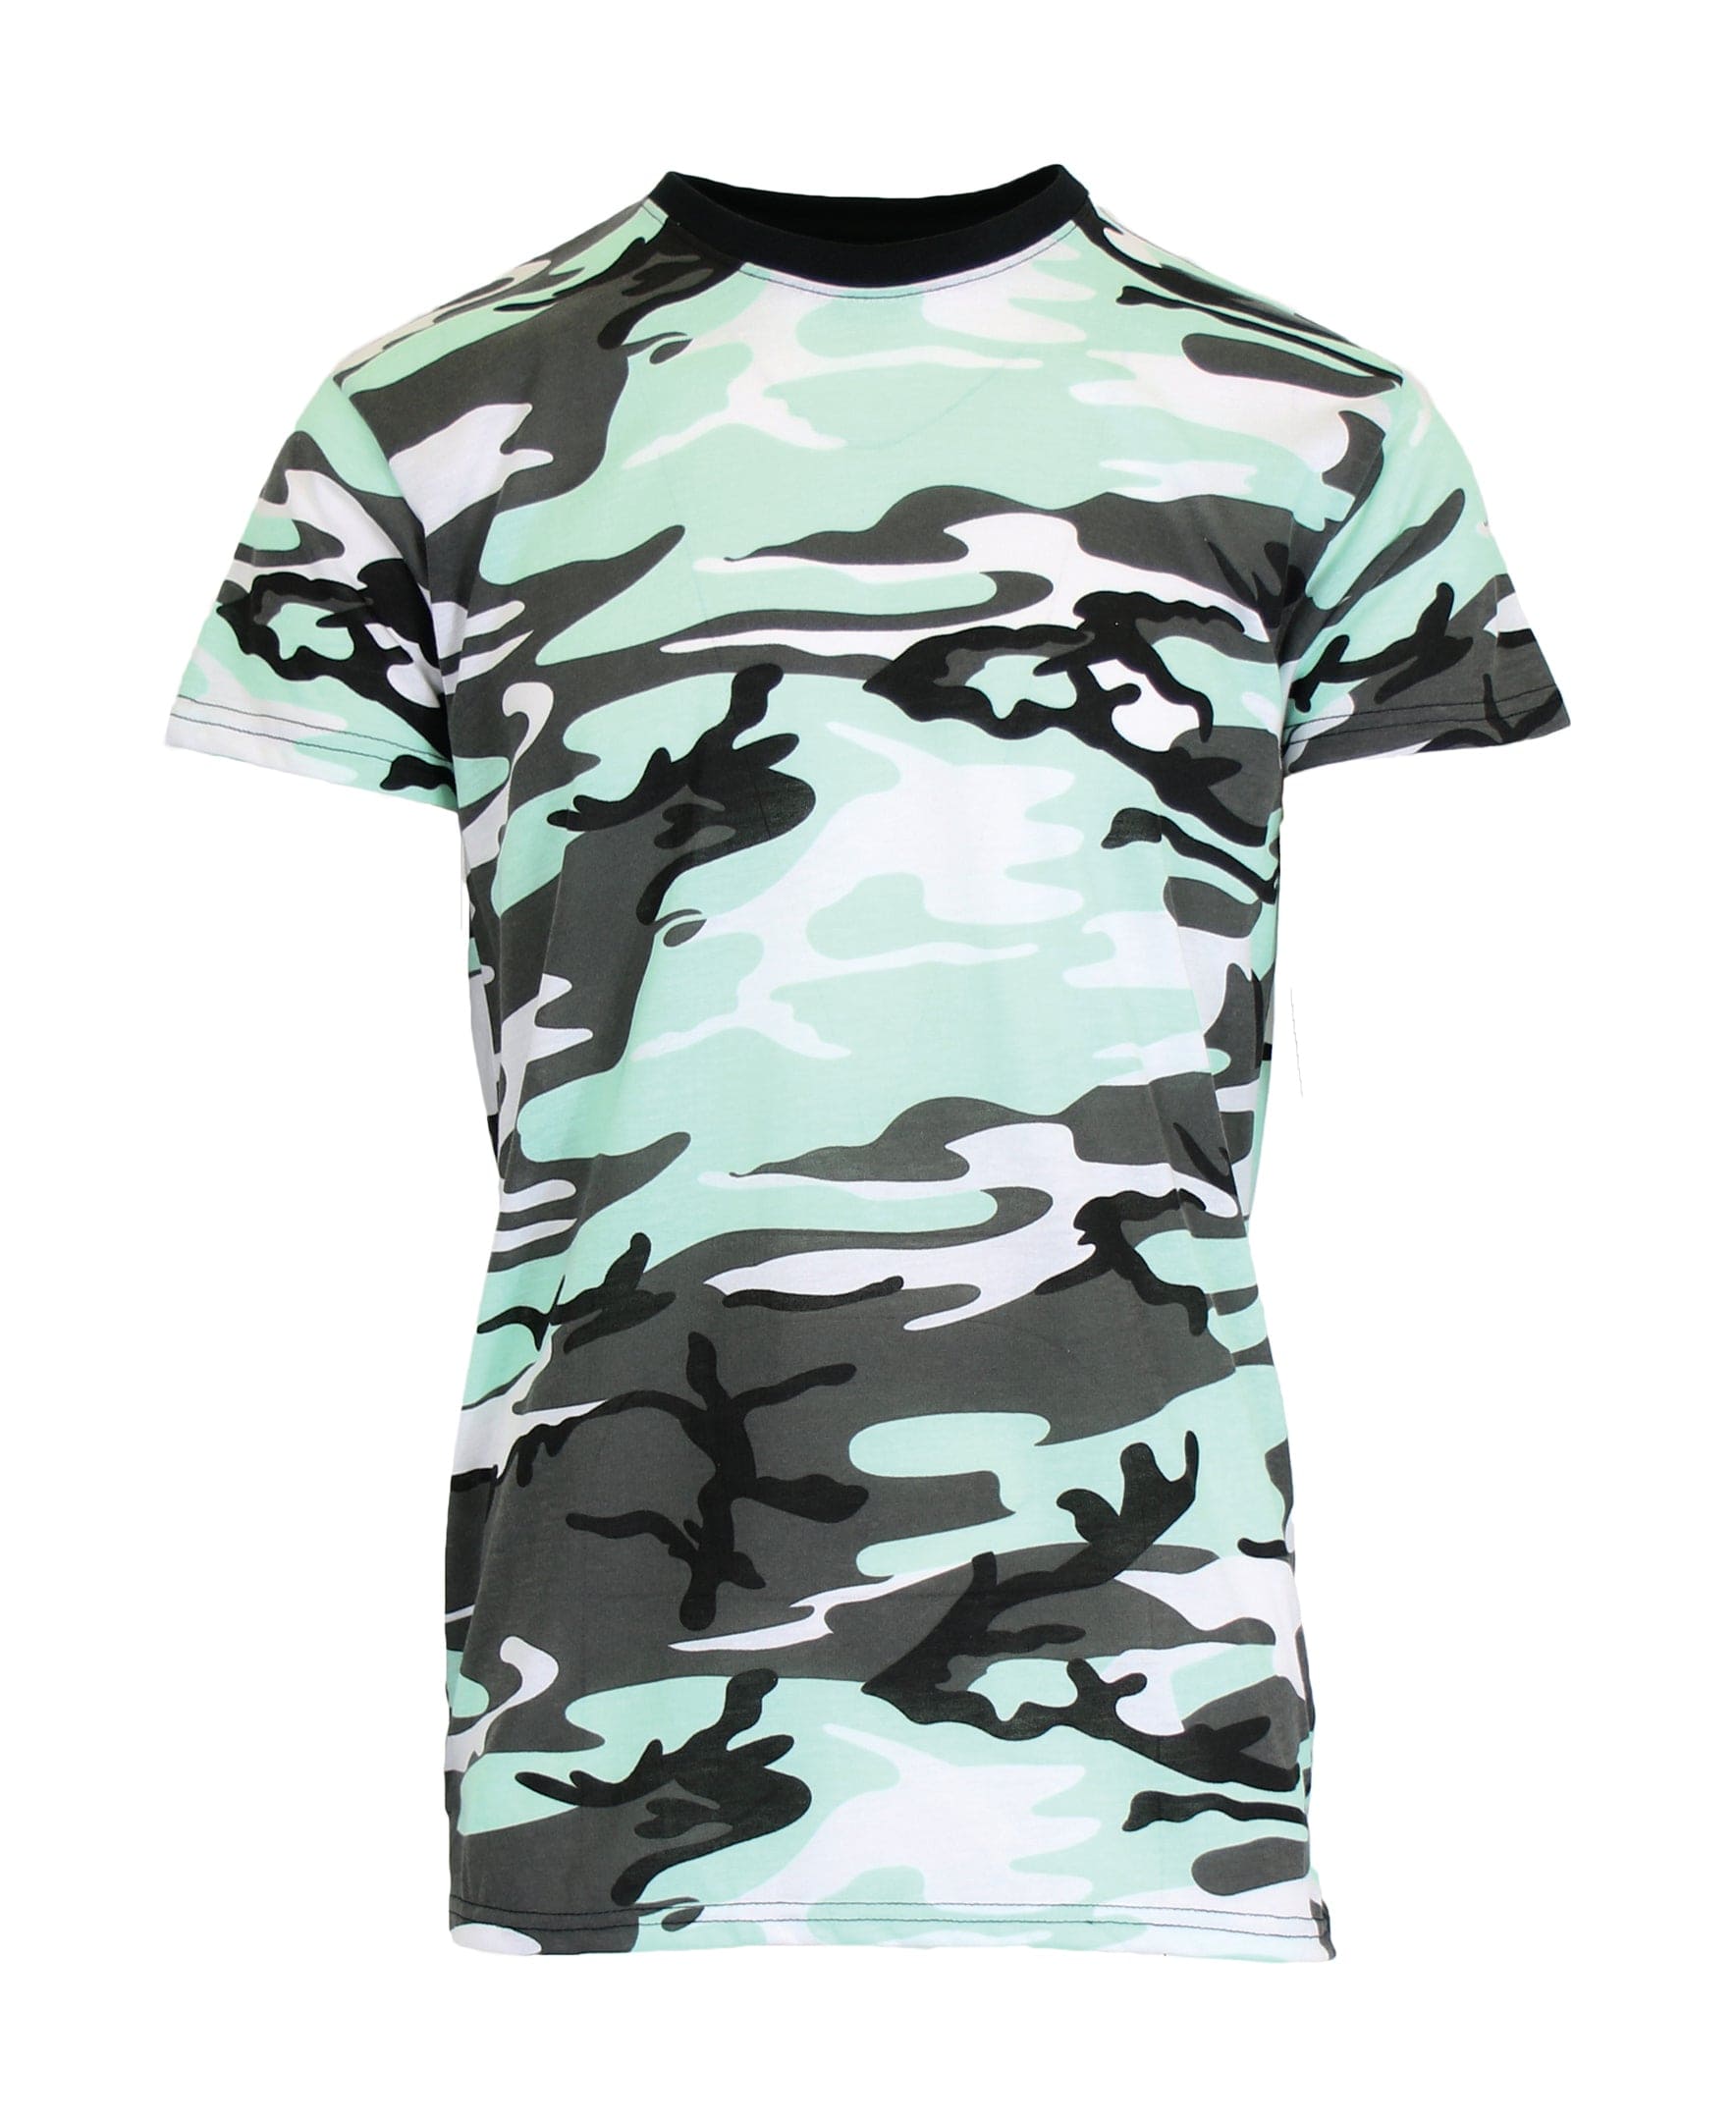 Belk Camo Jacquard T-Shirt